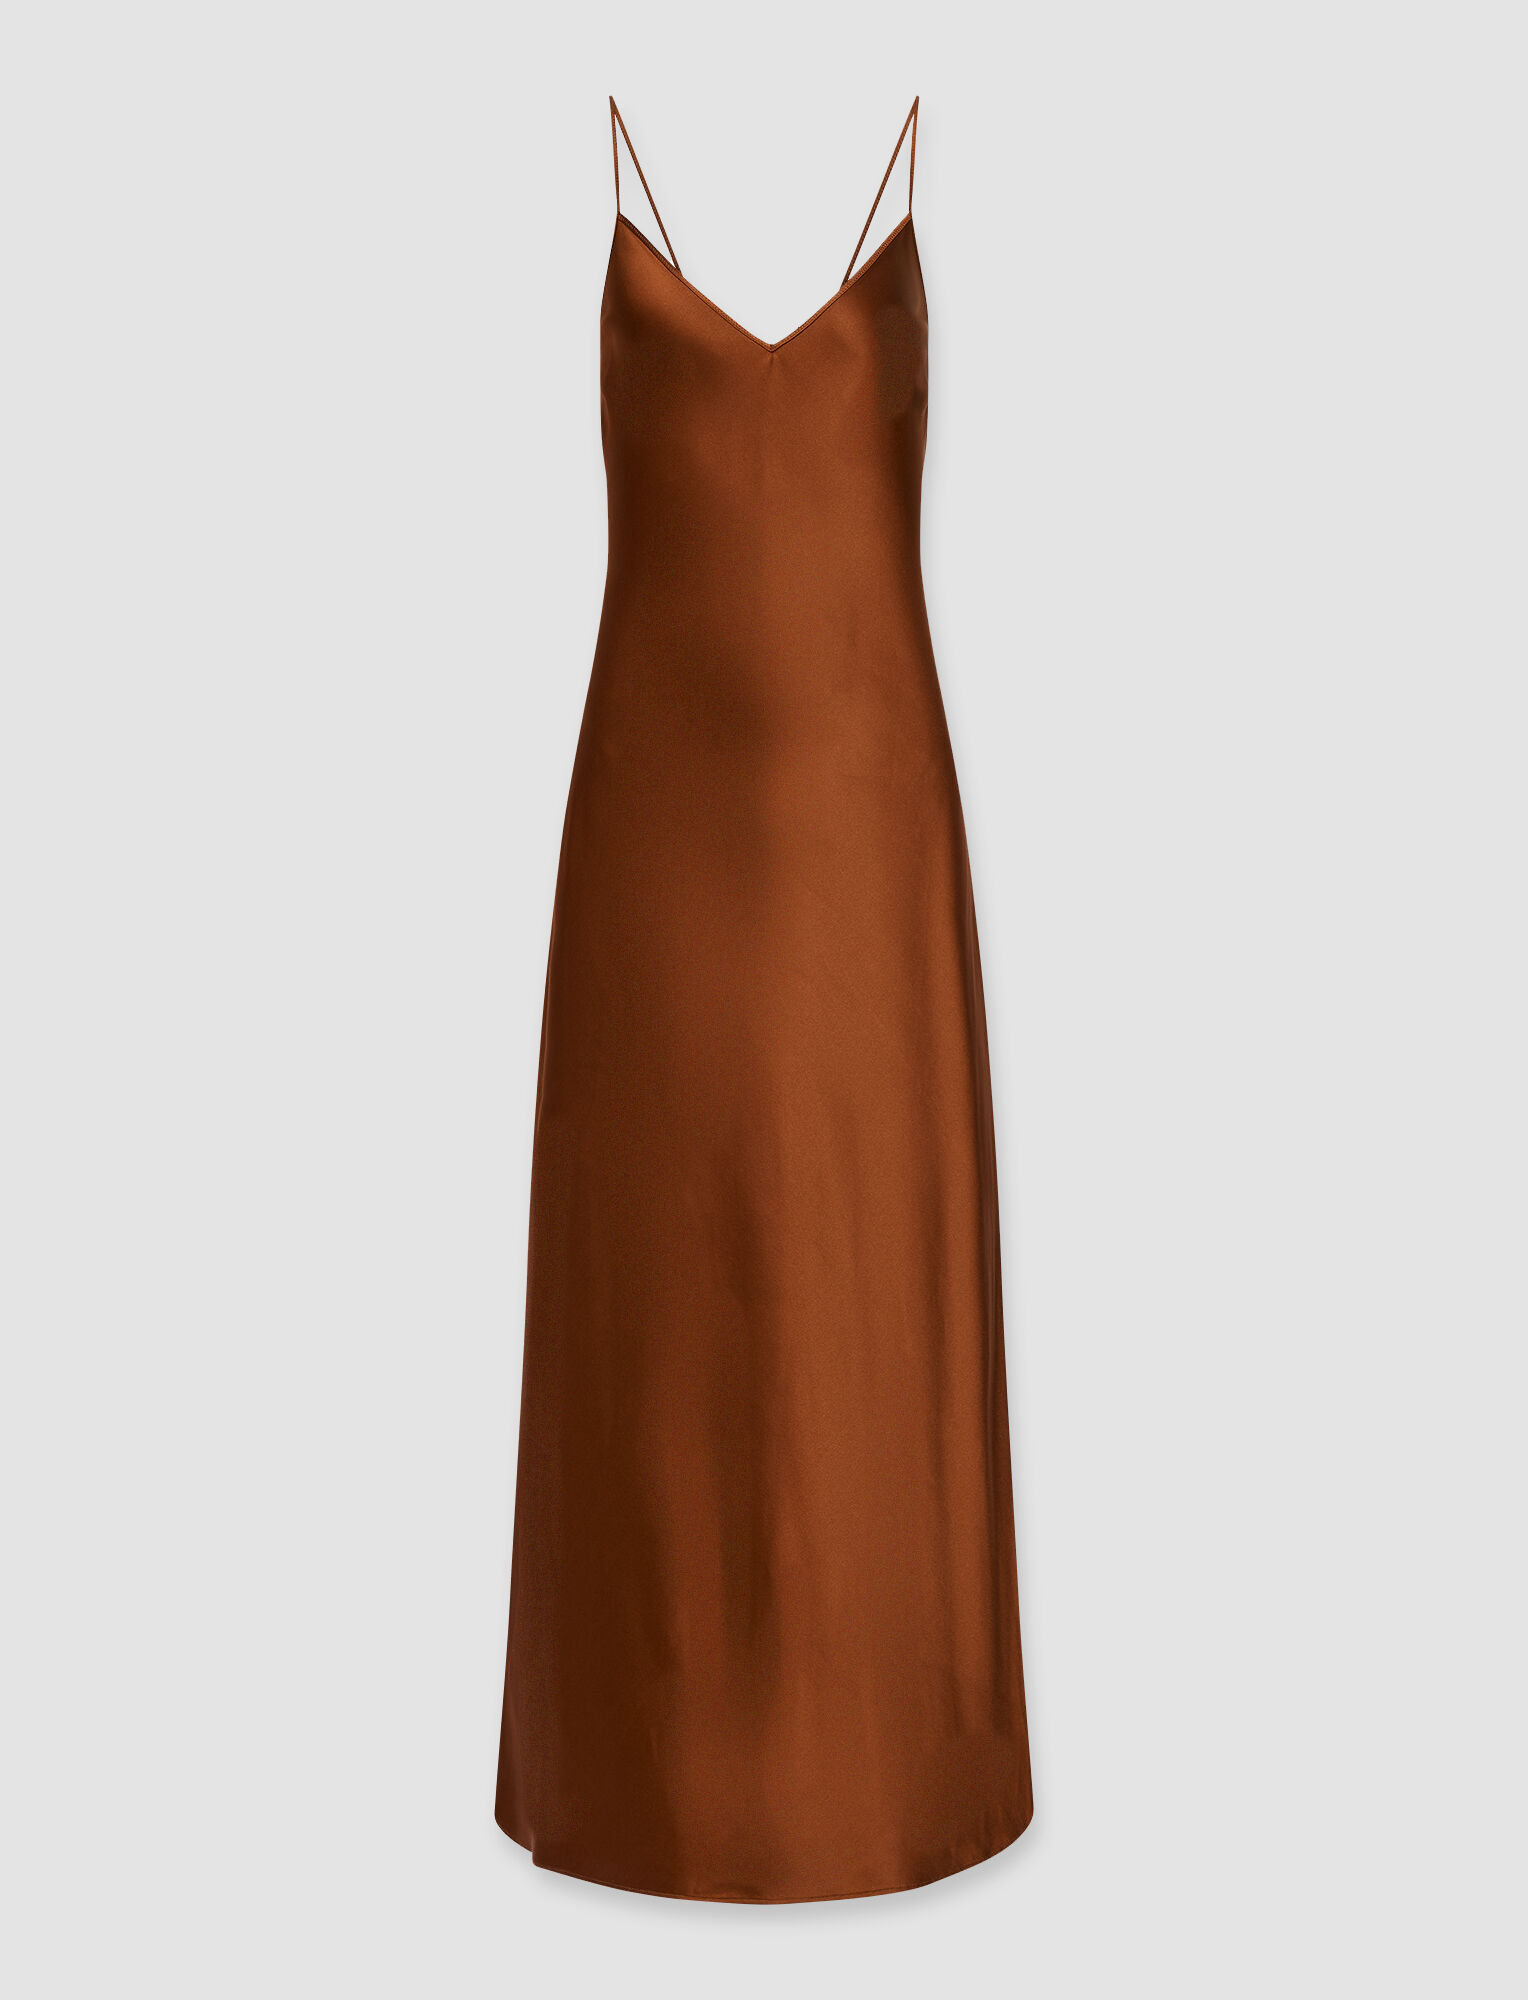 Joseph, Silk Satin Clea Dress, in Copper